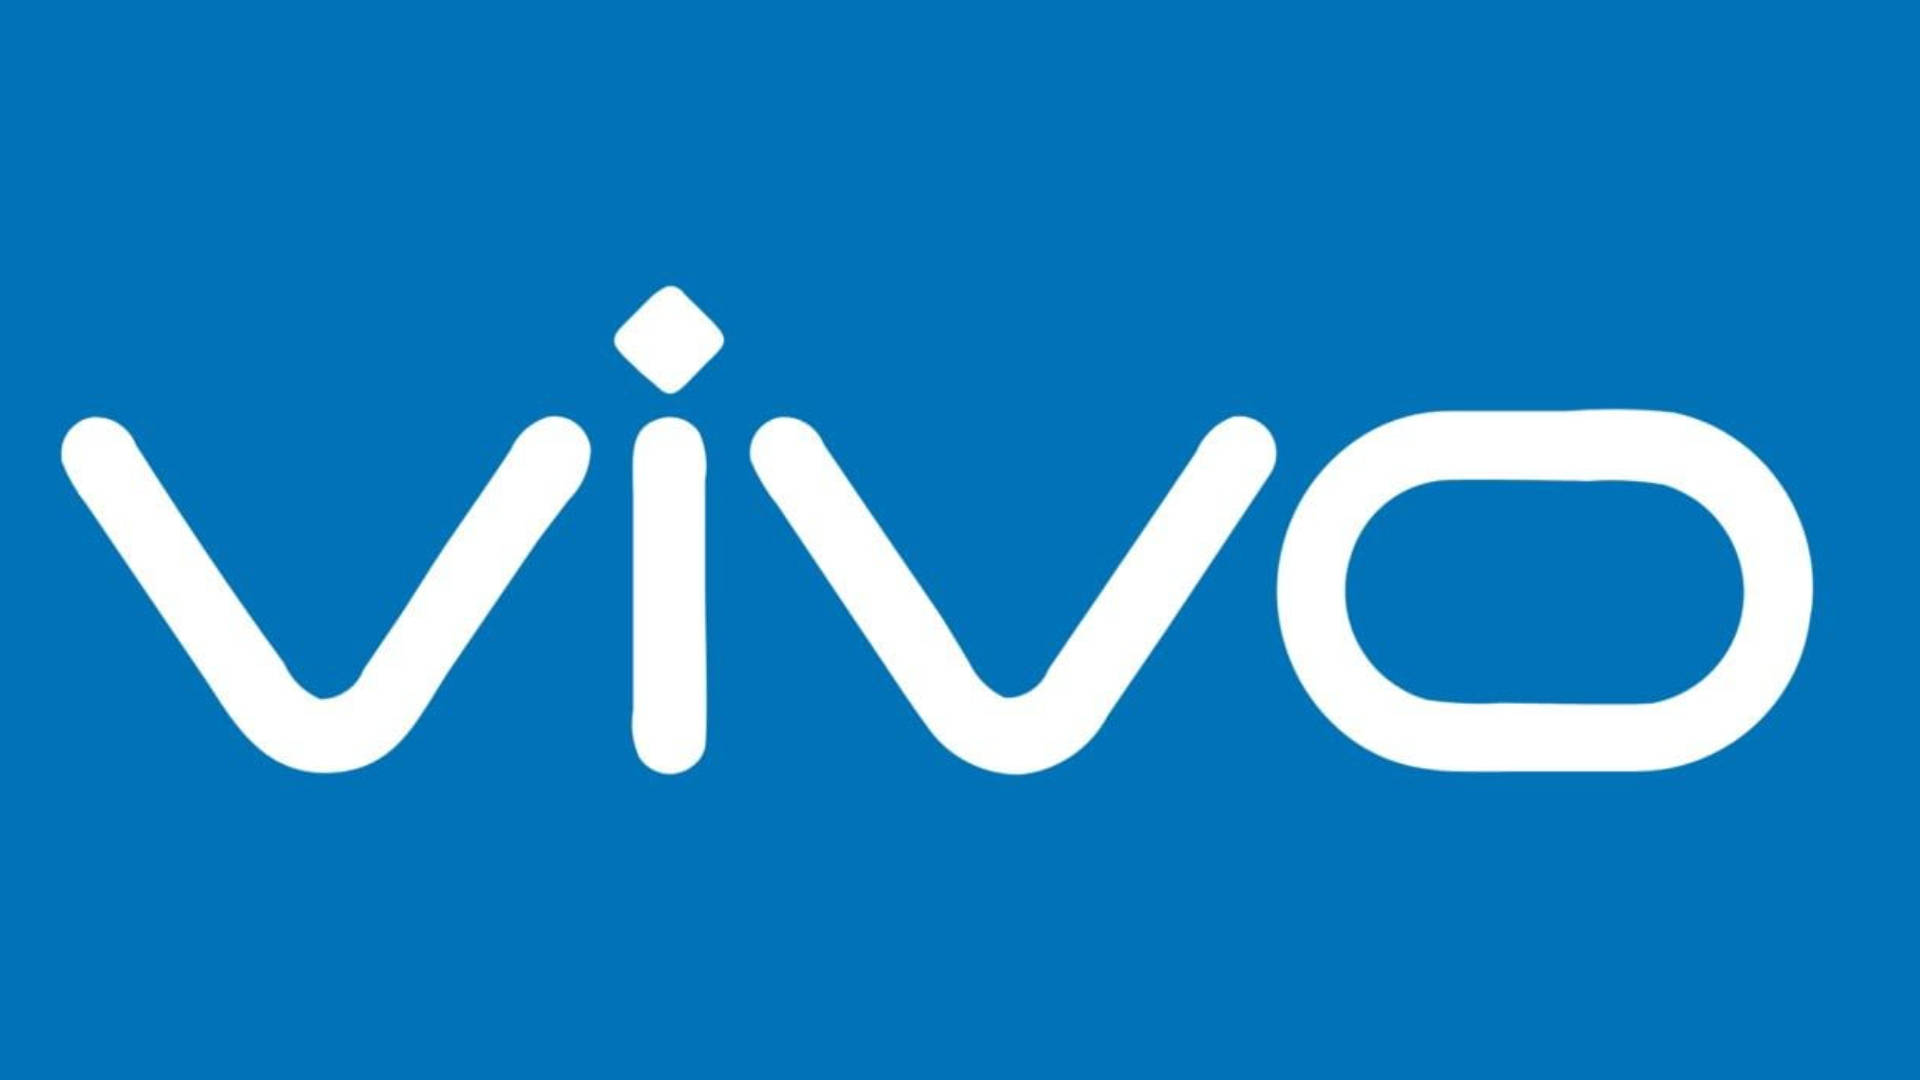 White Vivo Logo Blue Wallpaper